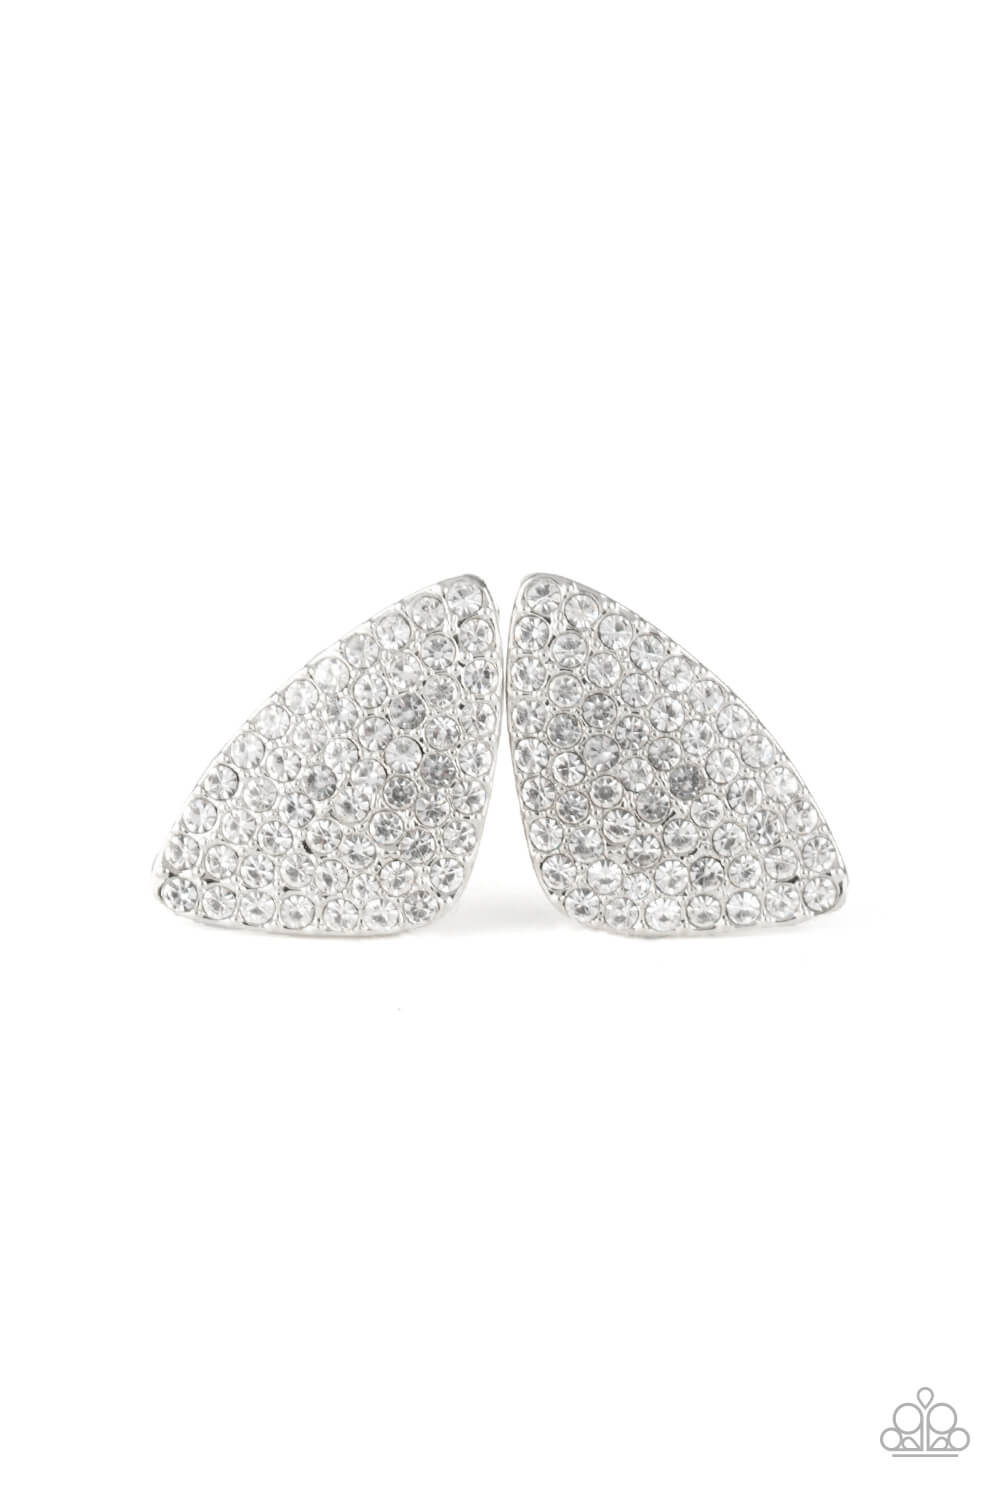 Supreme Sheen - White Earrings - Princess Glam Shop